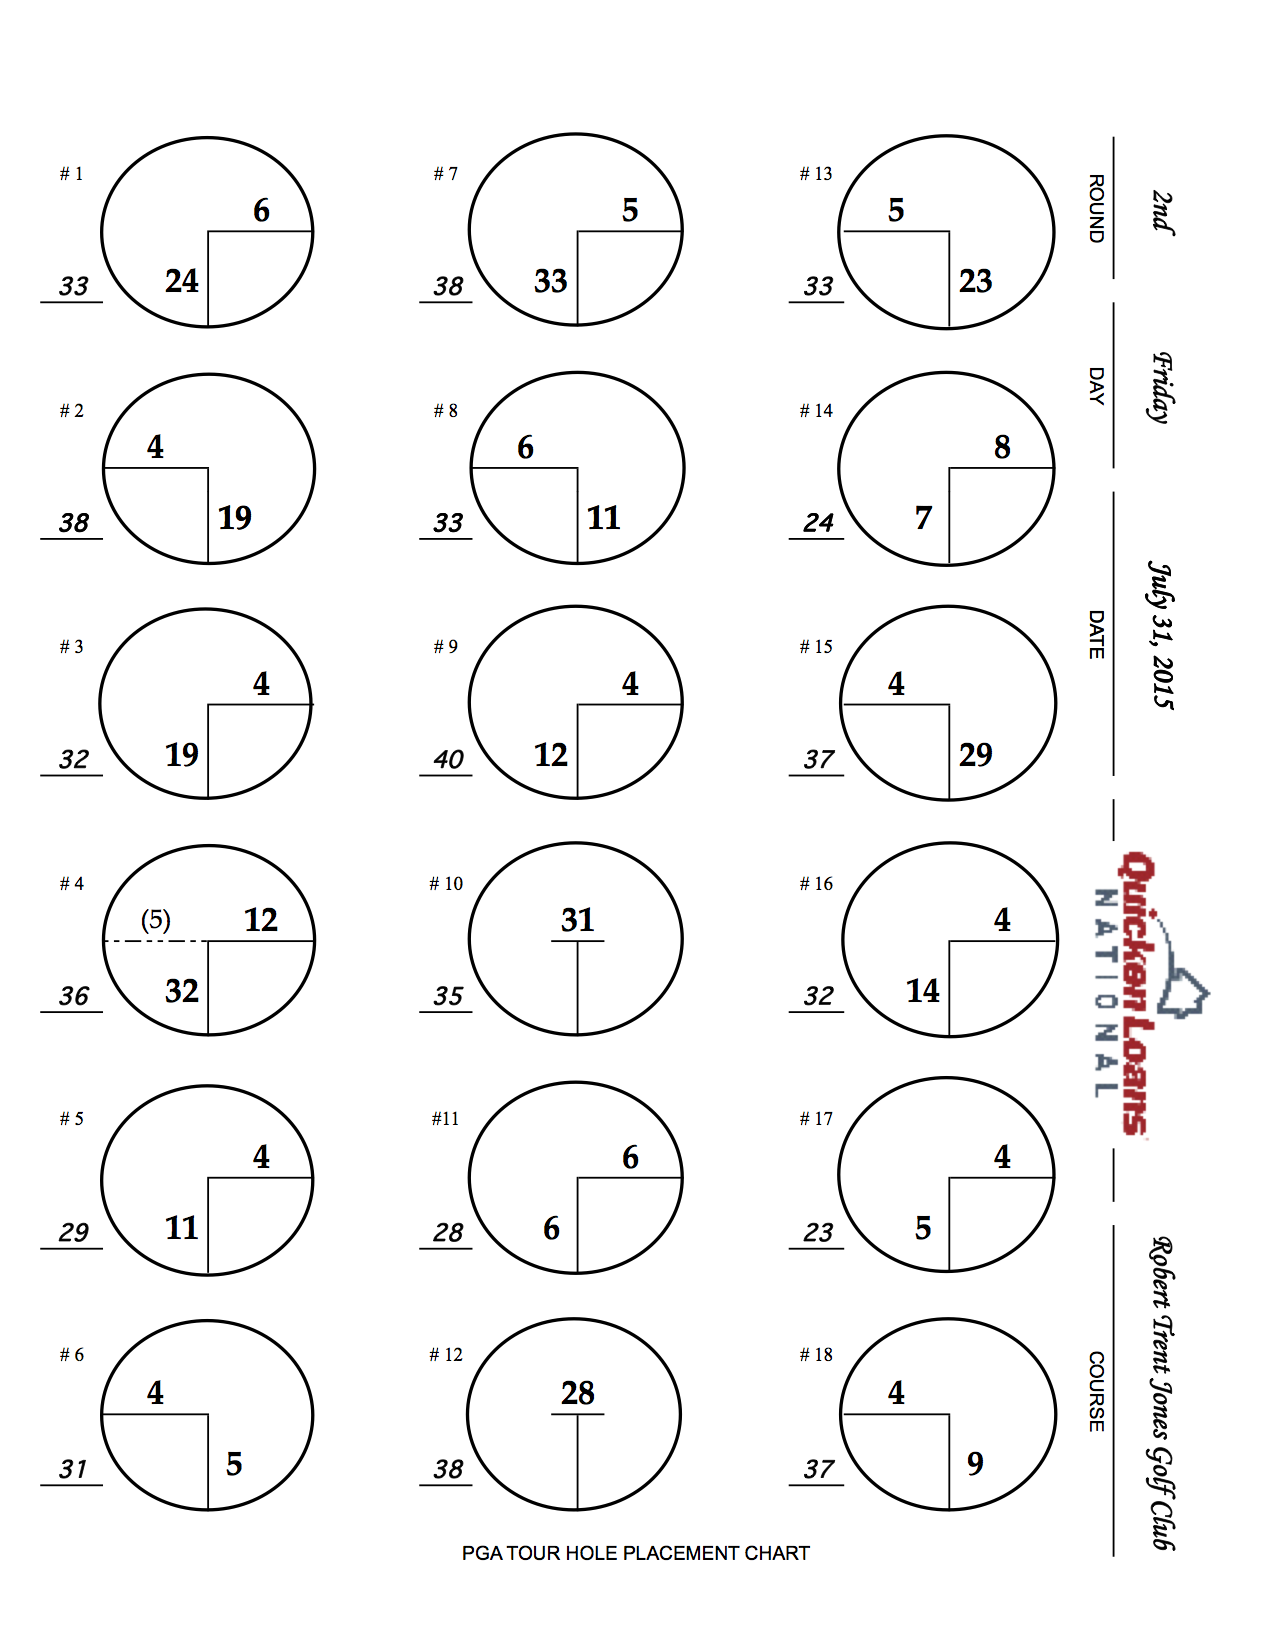 StrackaLine on Twitter "Round 2 pin sheet QLNational! PGATOUR golf